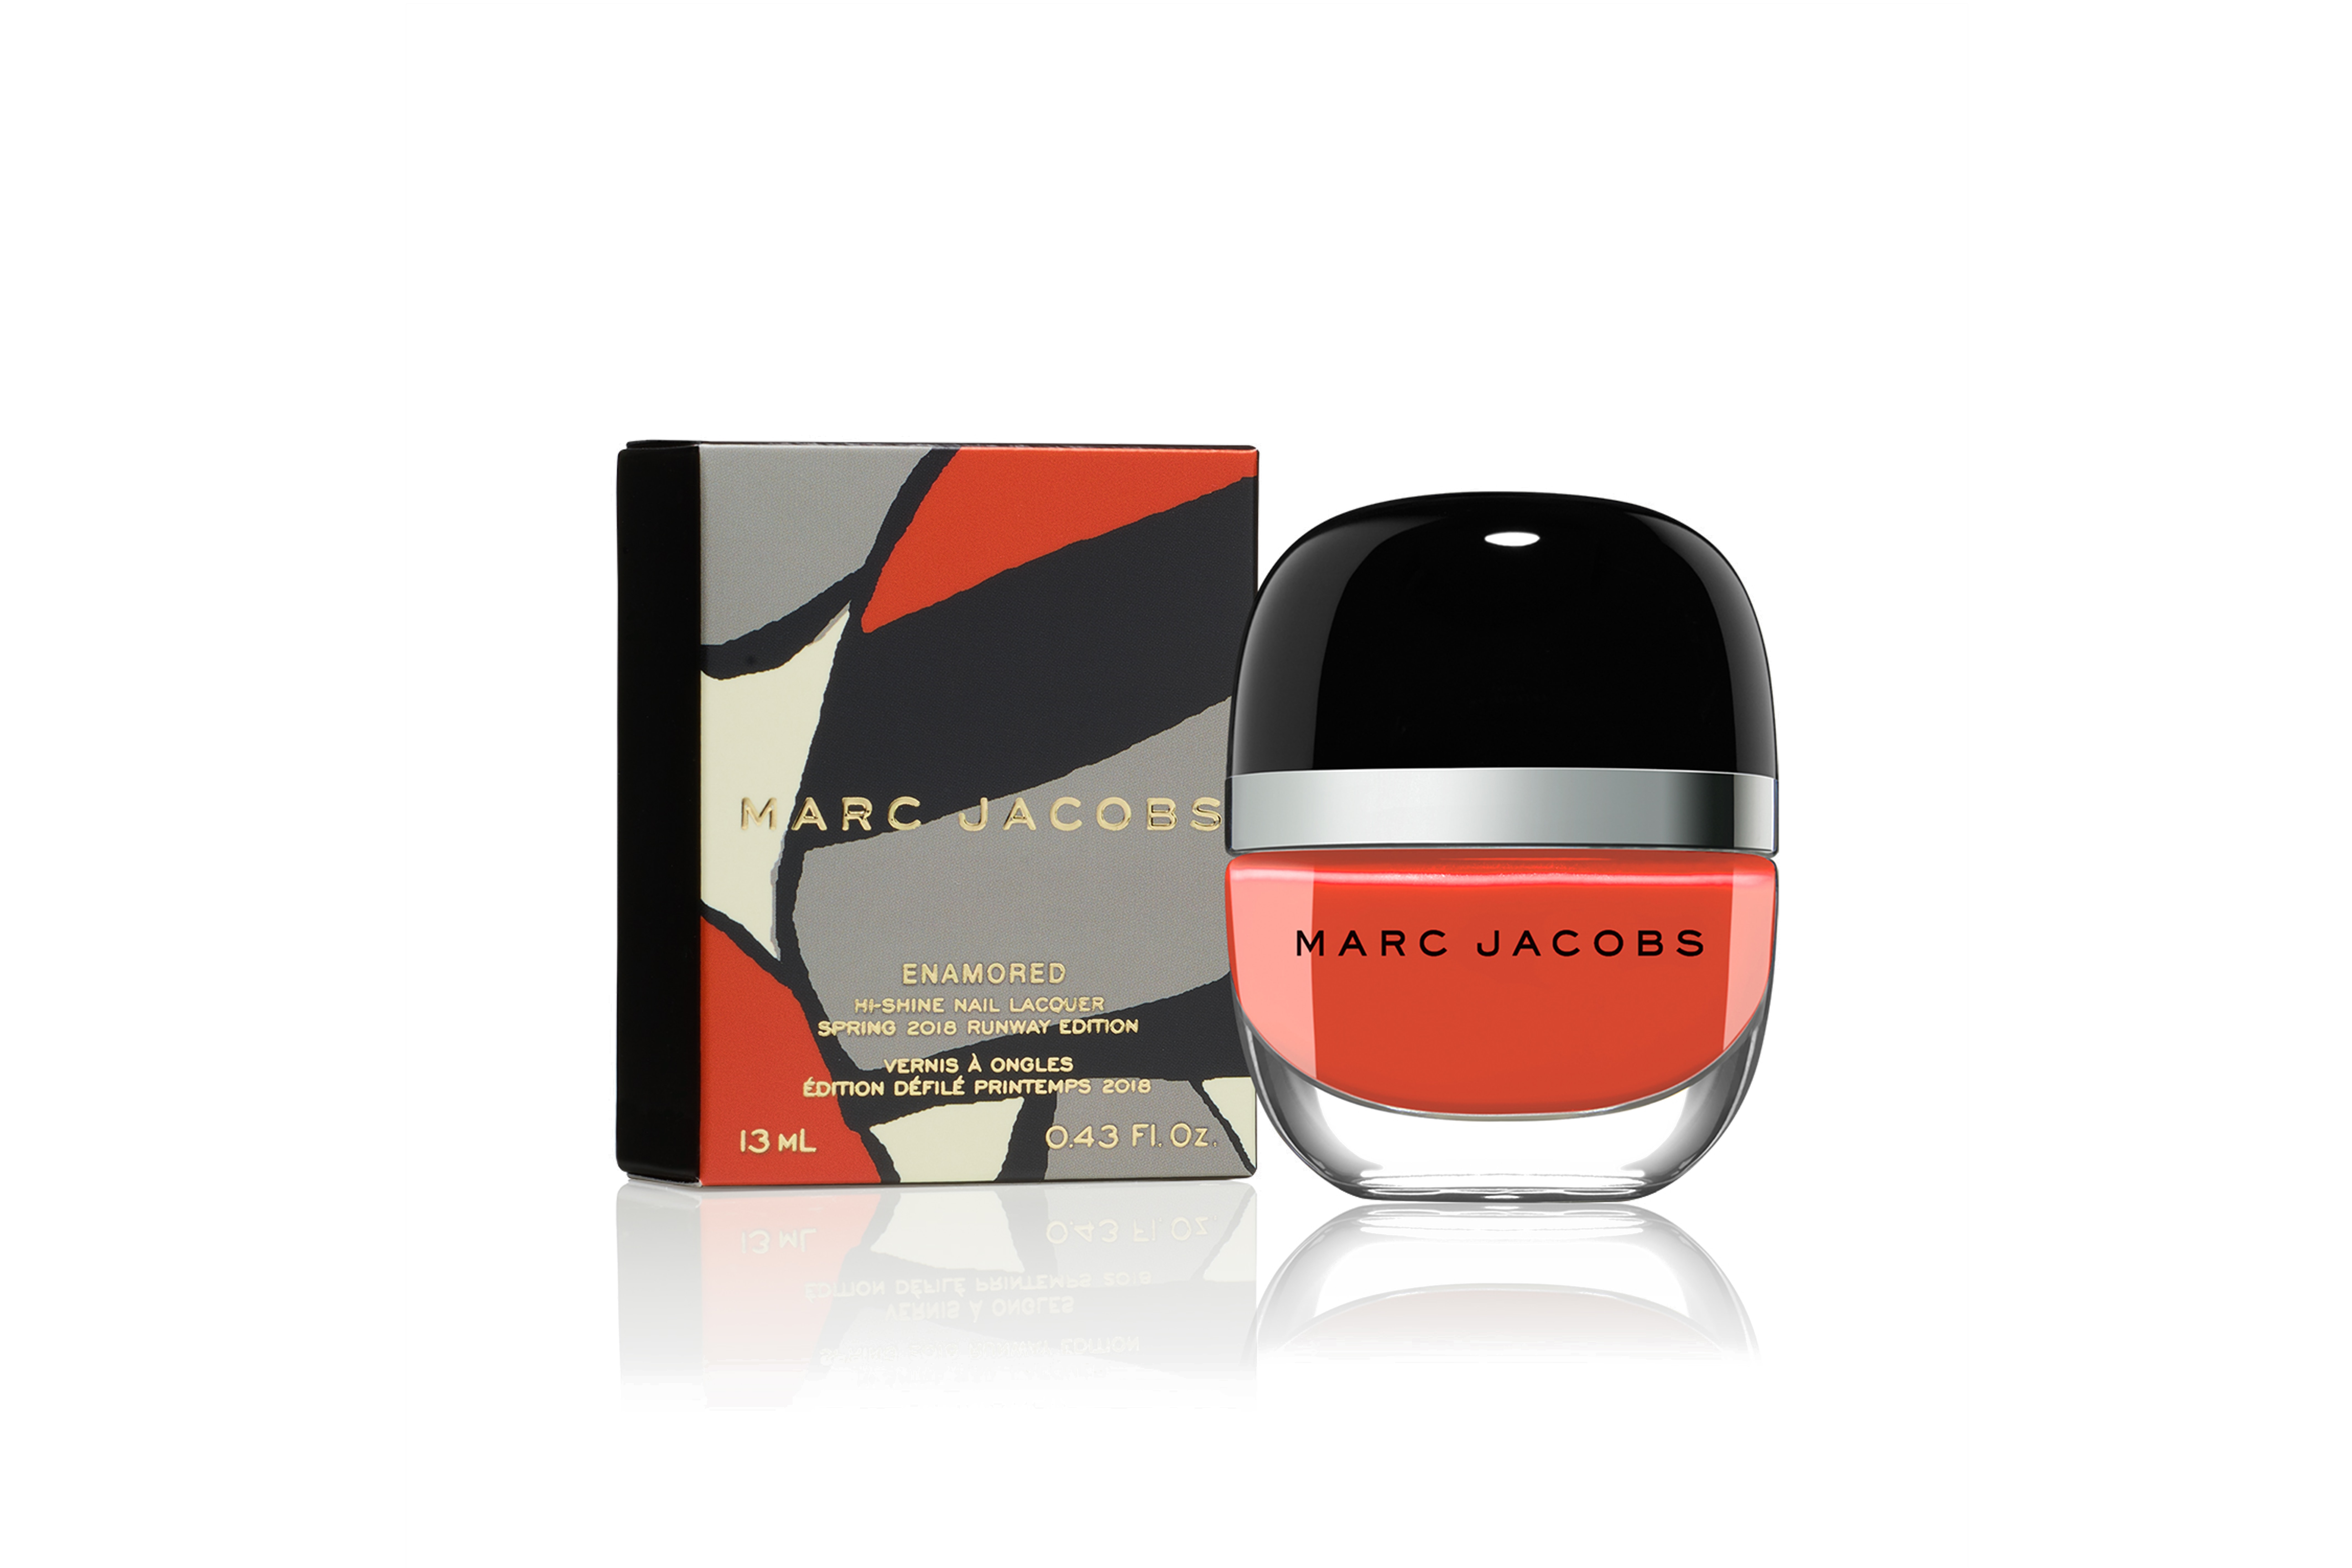 Marc Jacobs Beauty Spring Makeup Arrivals Eyeliner Nail Polish Lipstick Kit Sephora Beauty